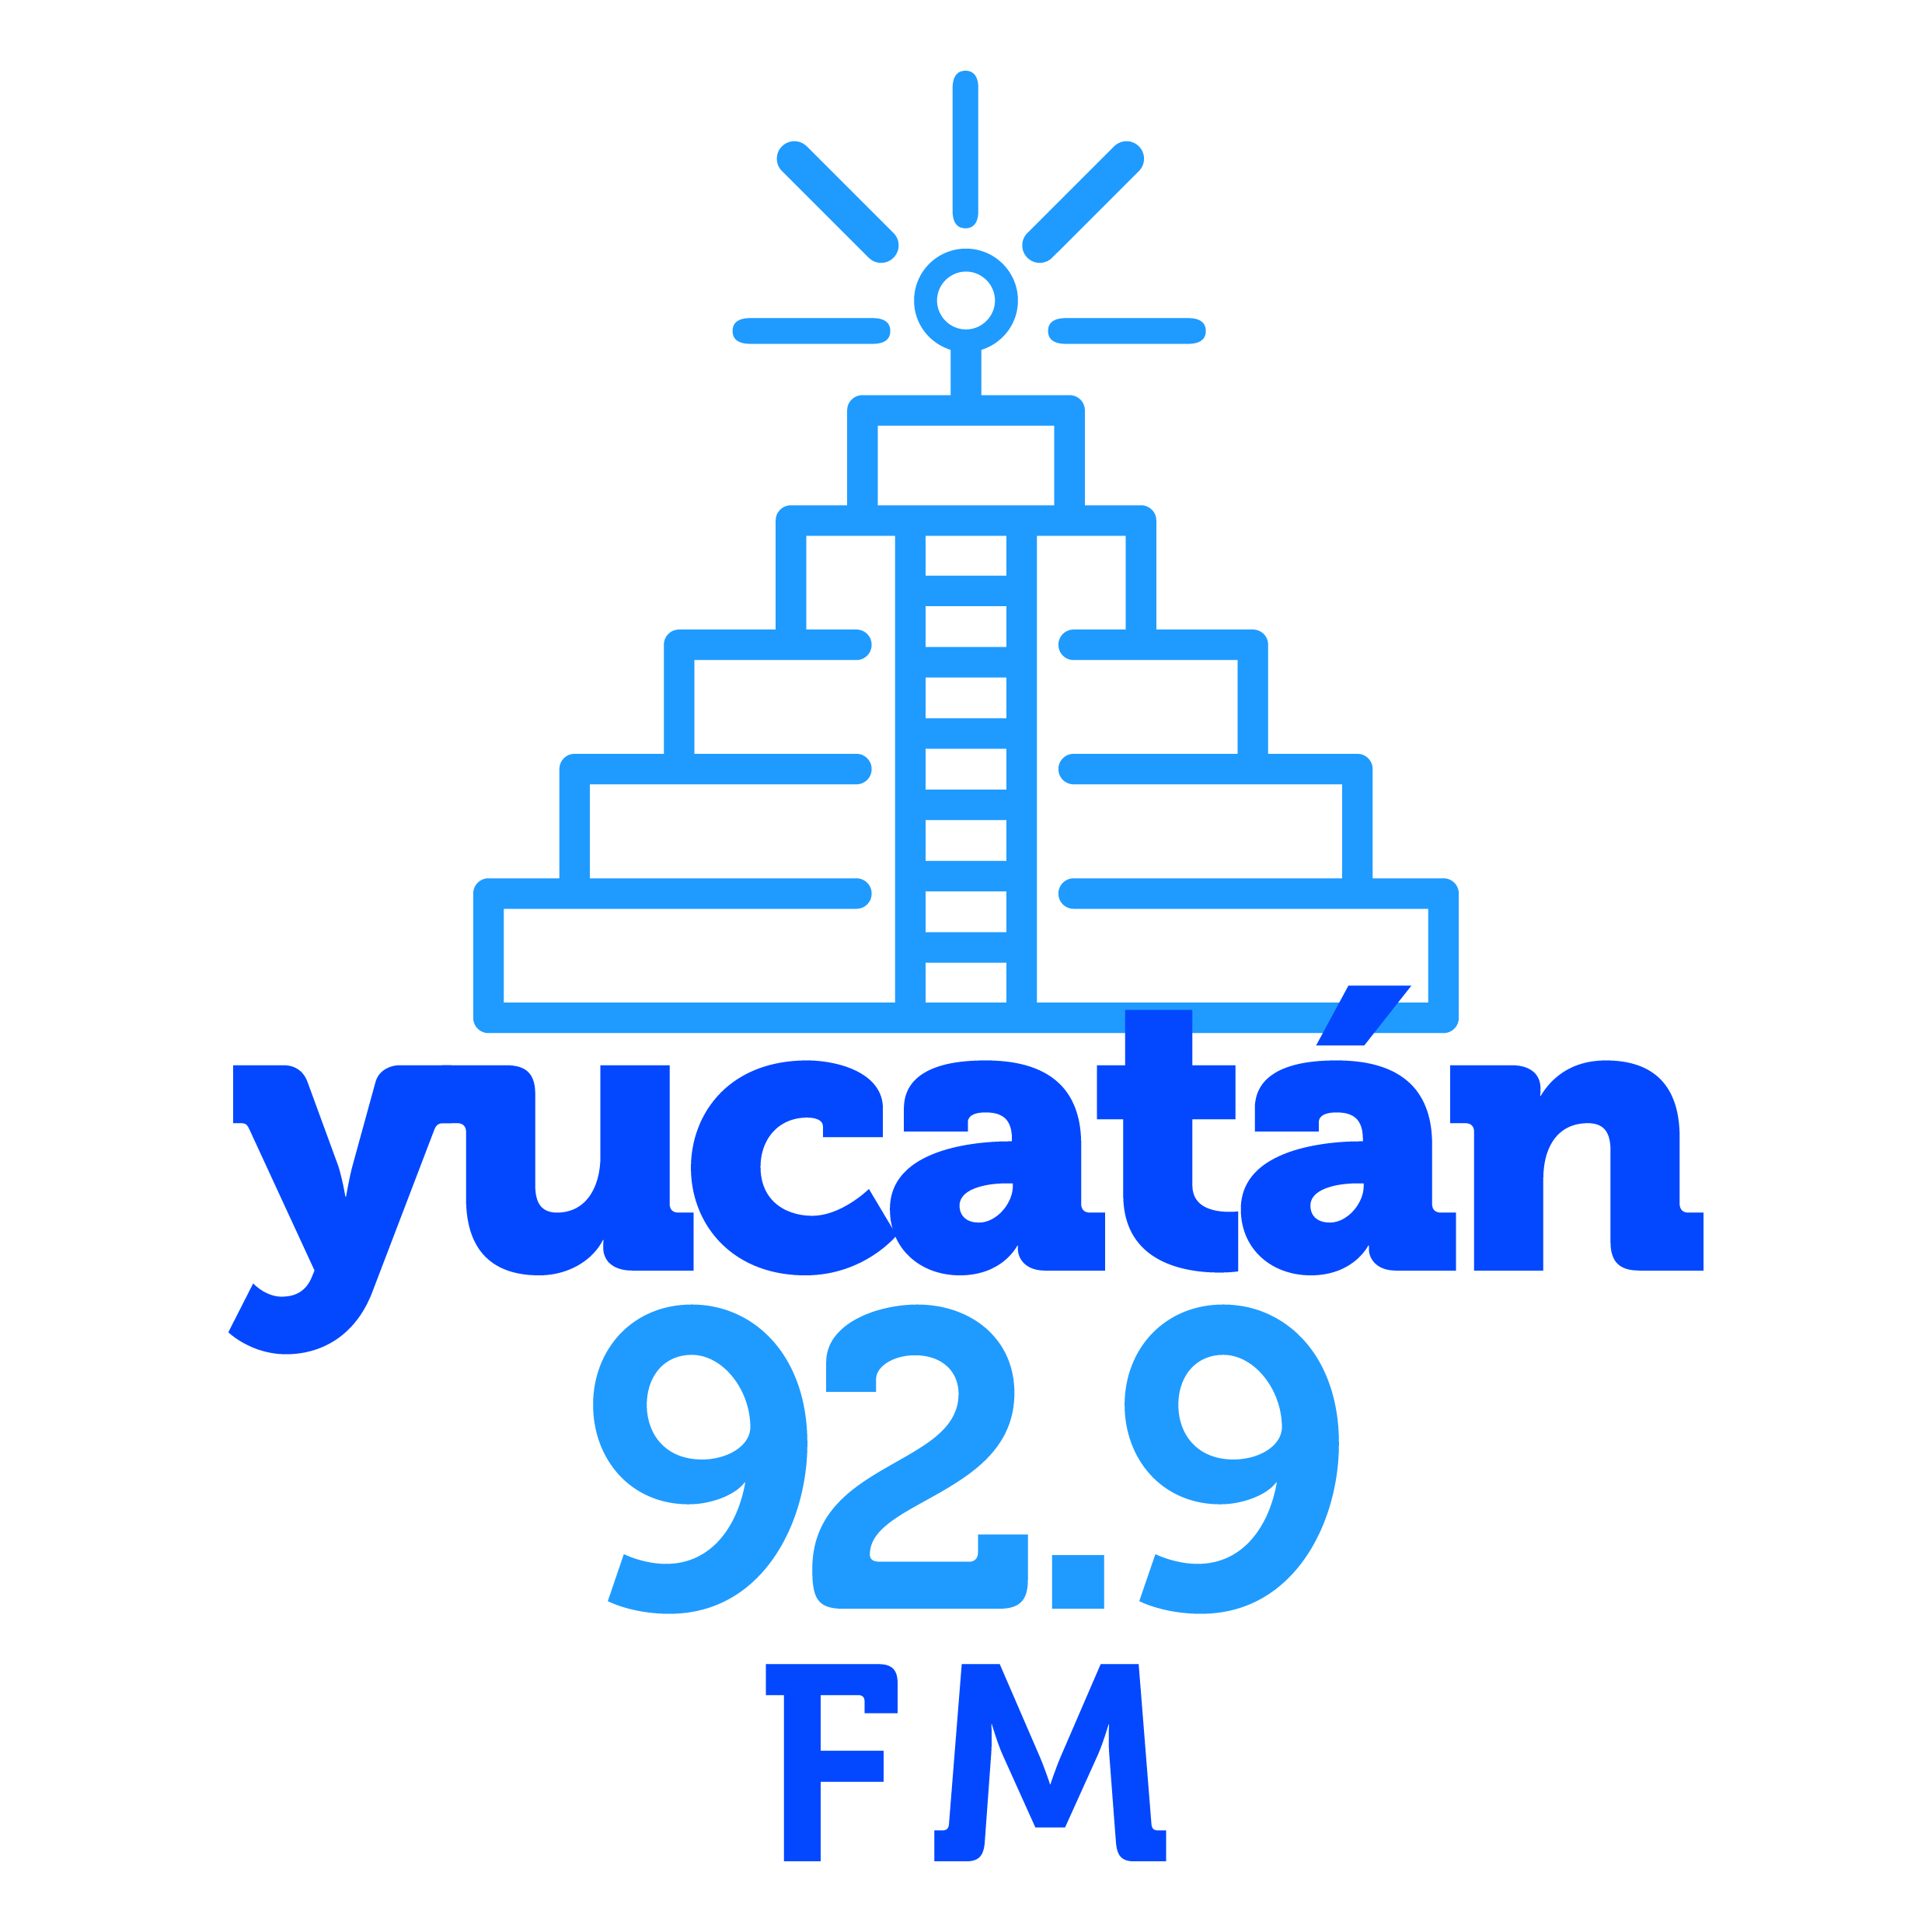 Yucatán FM (Mérida) - 92.9 FM - XHYUC-FM - IMER - Mérida, YU